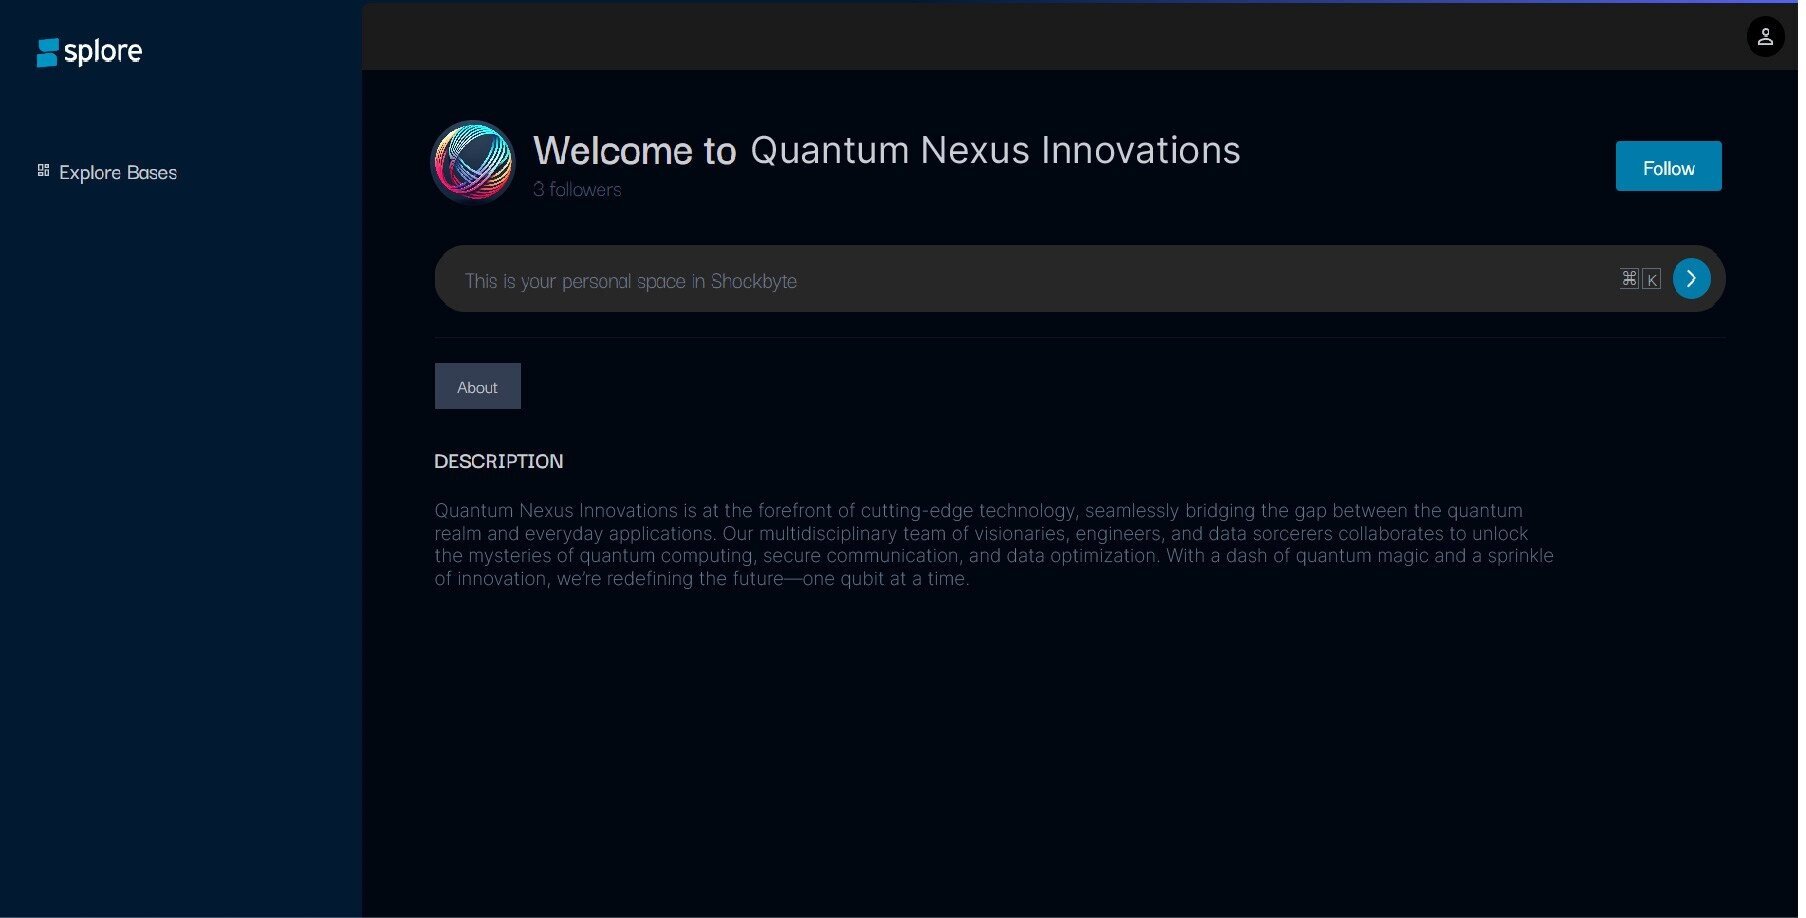 Welcome to Quatum Nexus Innovations